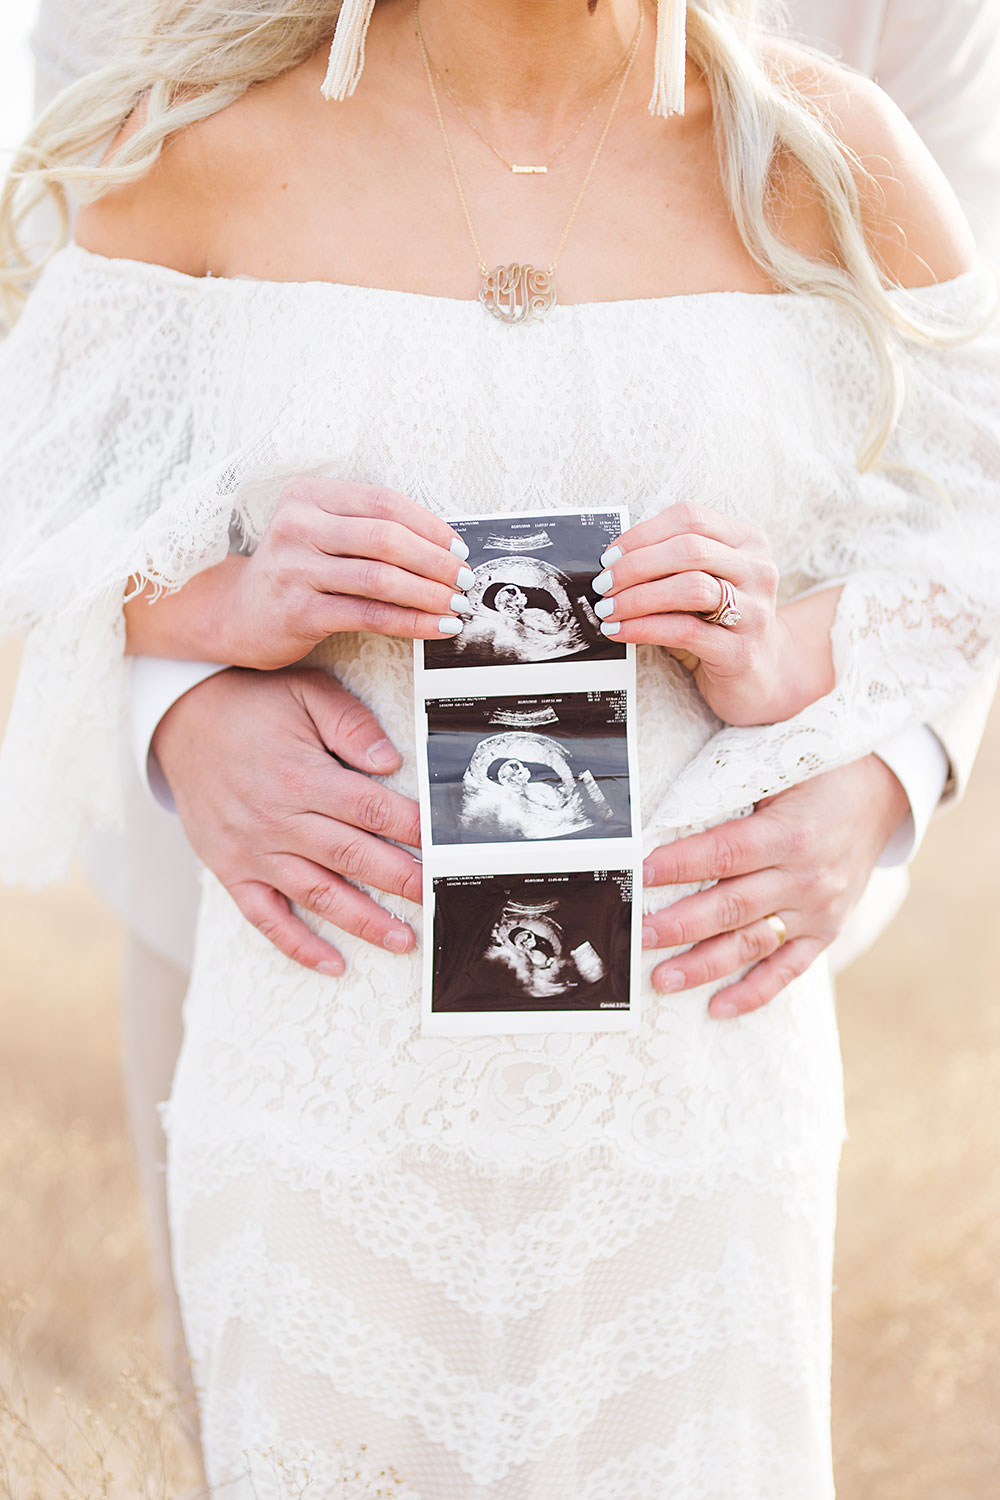 maternity photoshoot sonogram